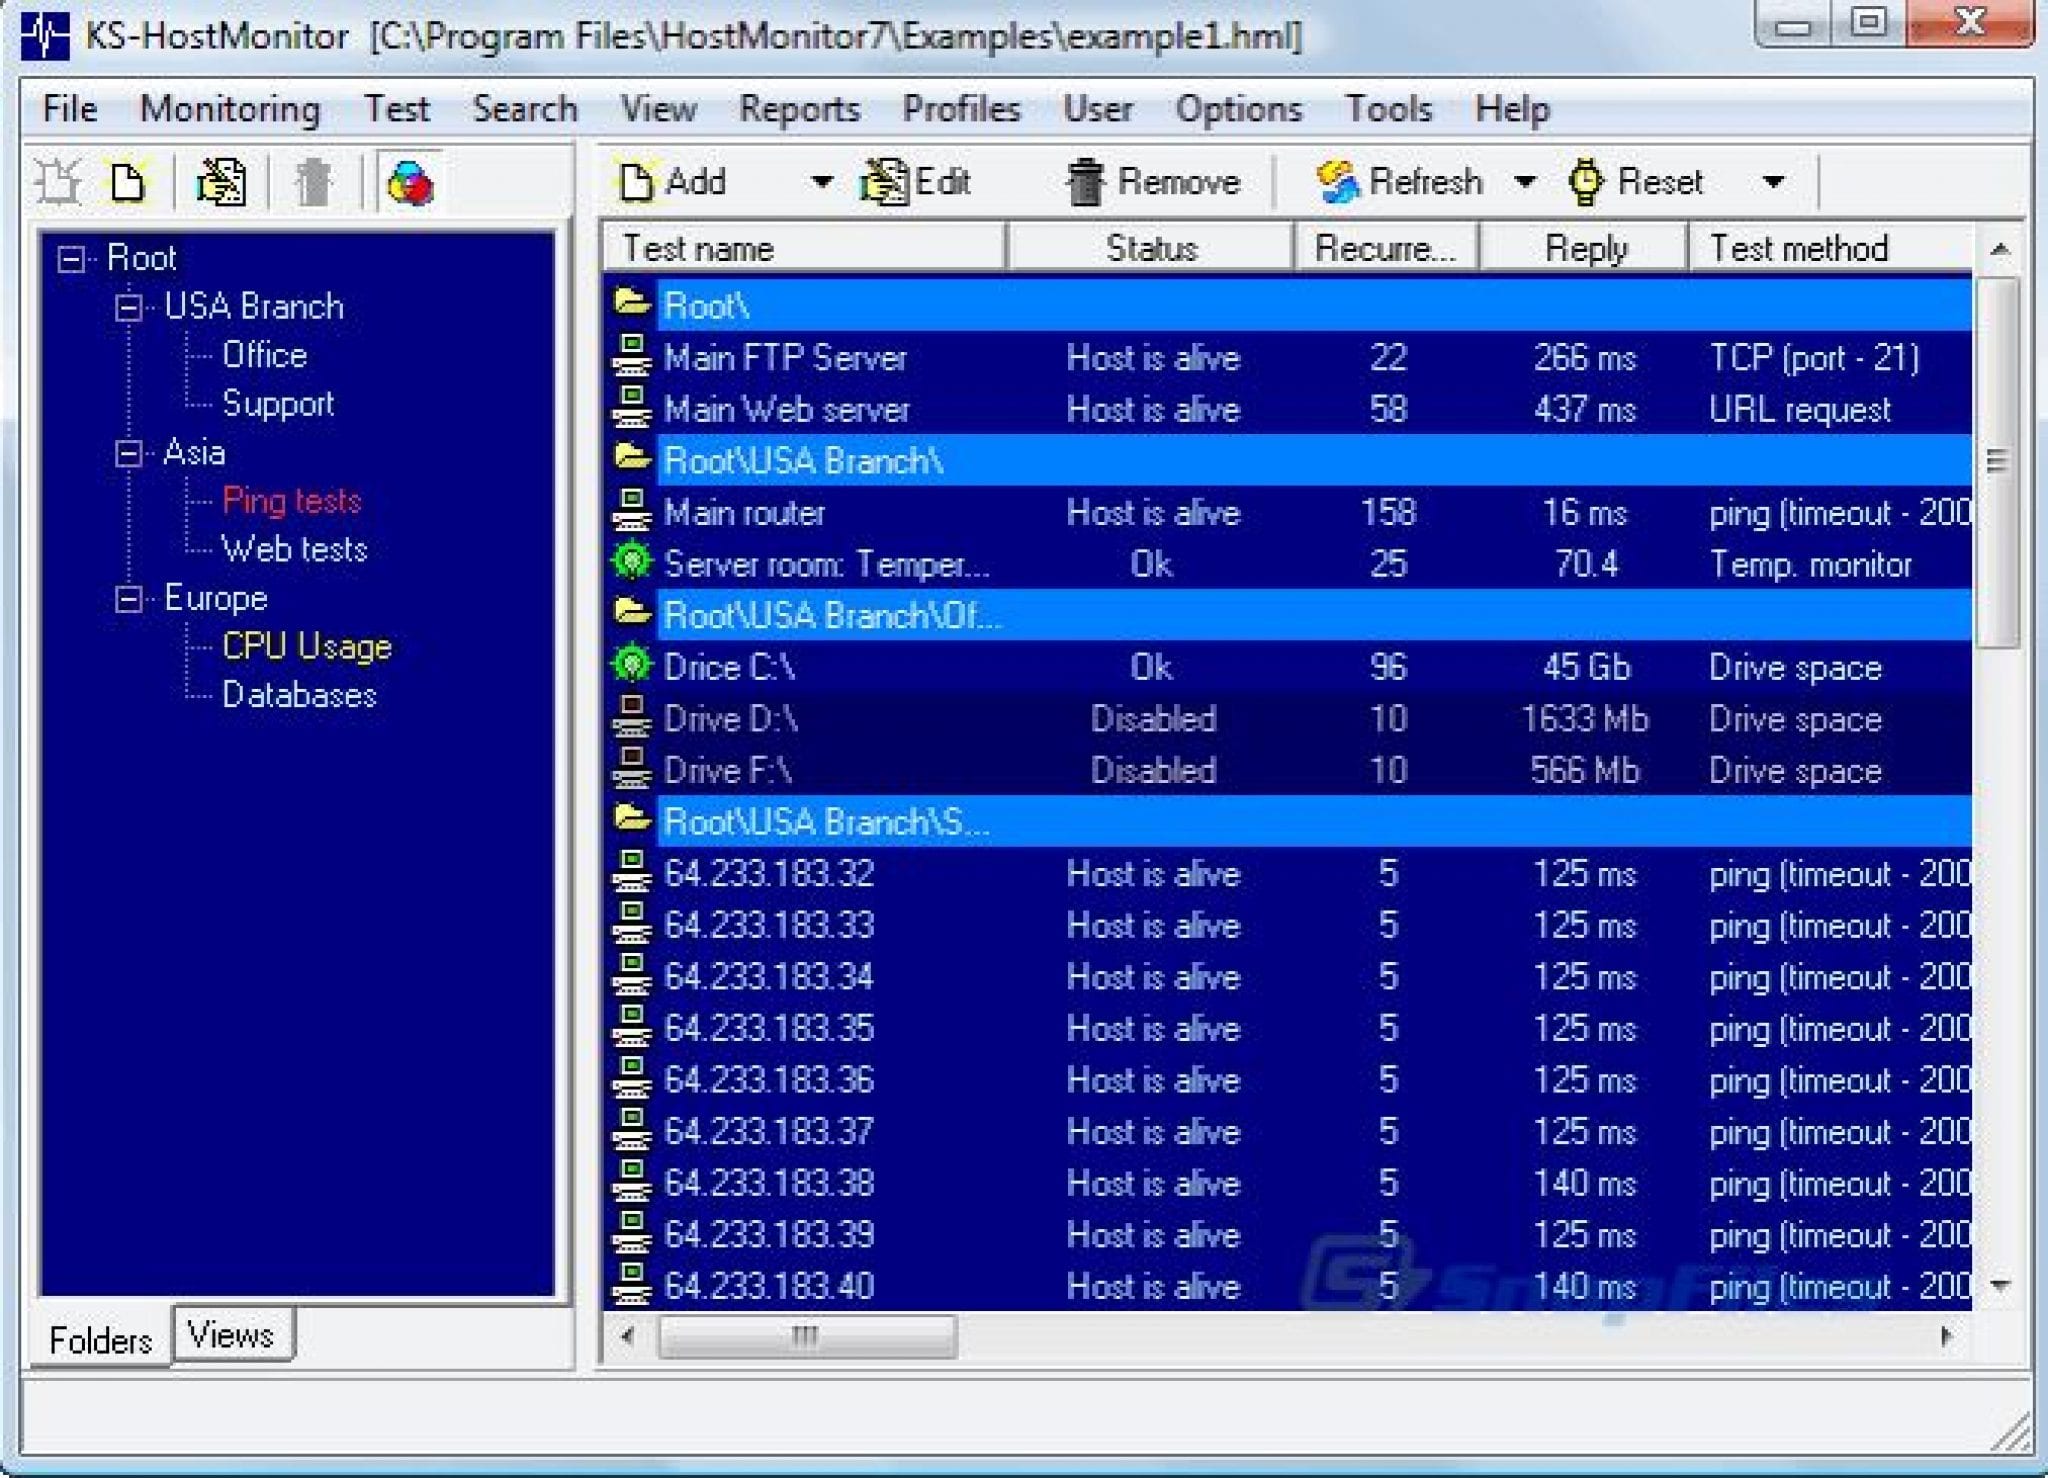 Ping timeout. Монитор софт. Monitor программа. Софт для серверов. Void Monitor программа.